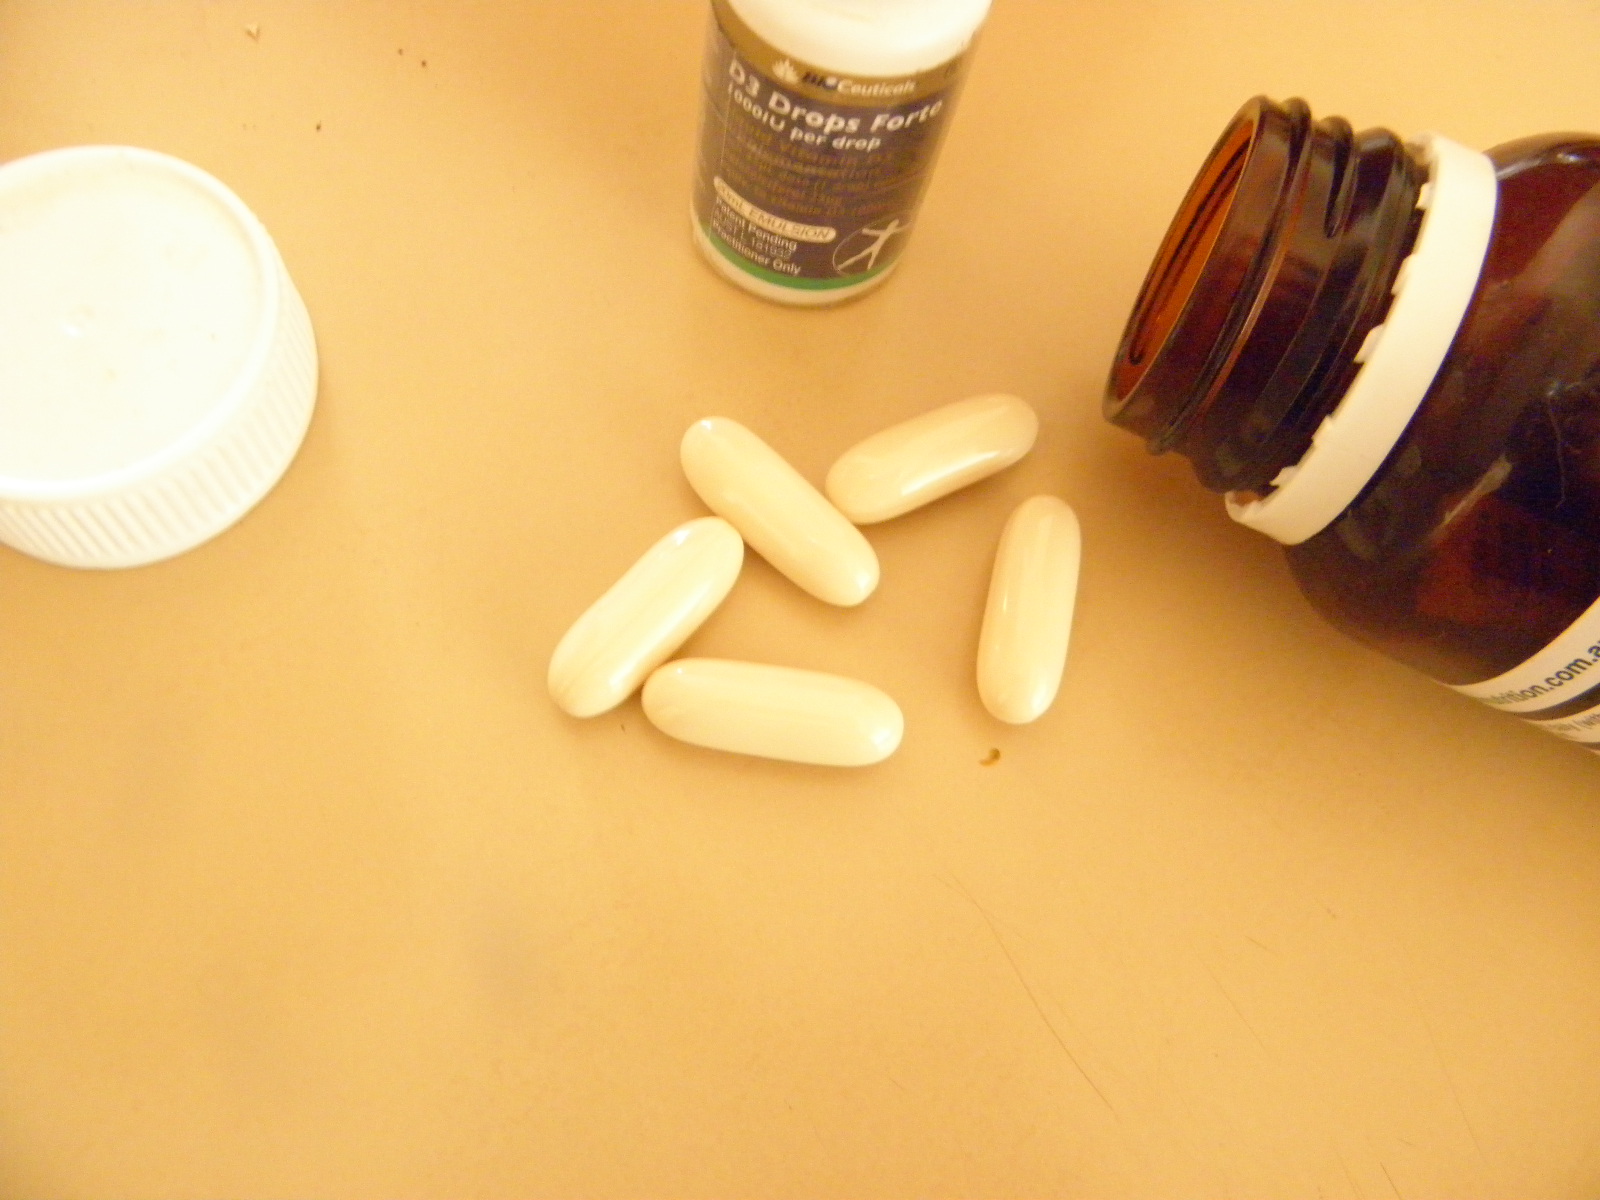 calcium supplement tablets, bottle and vitamin D supplement bottle